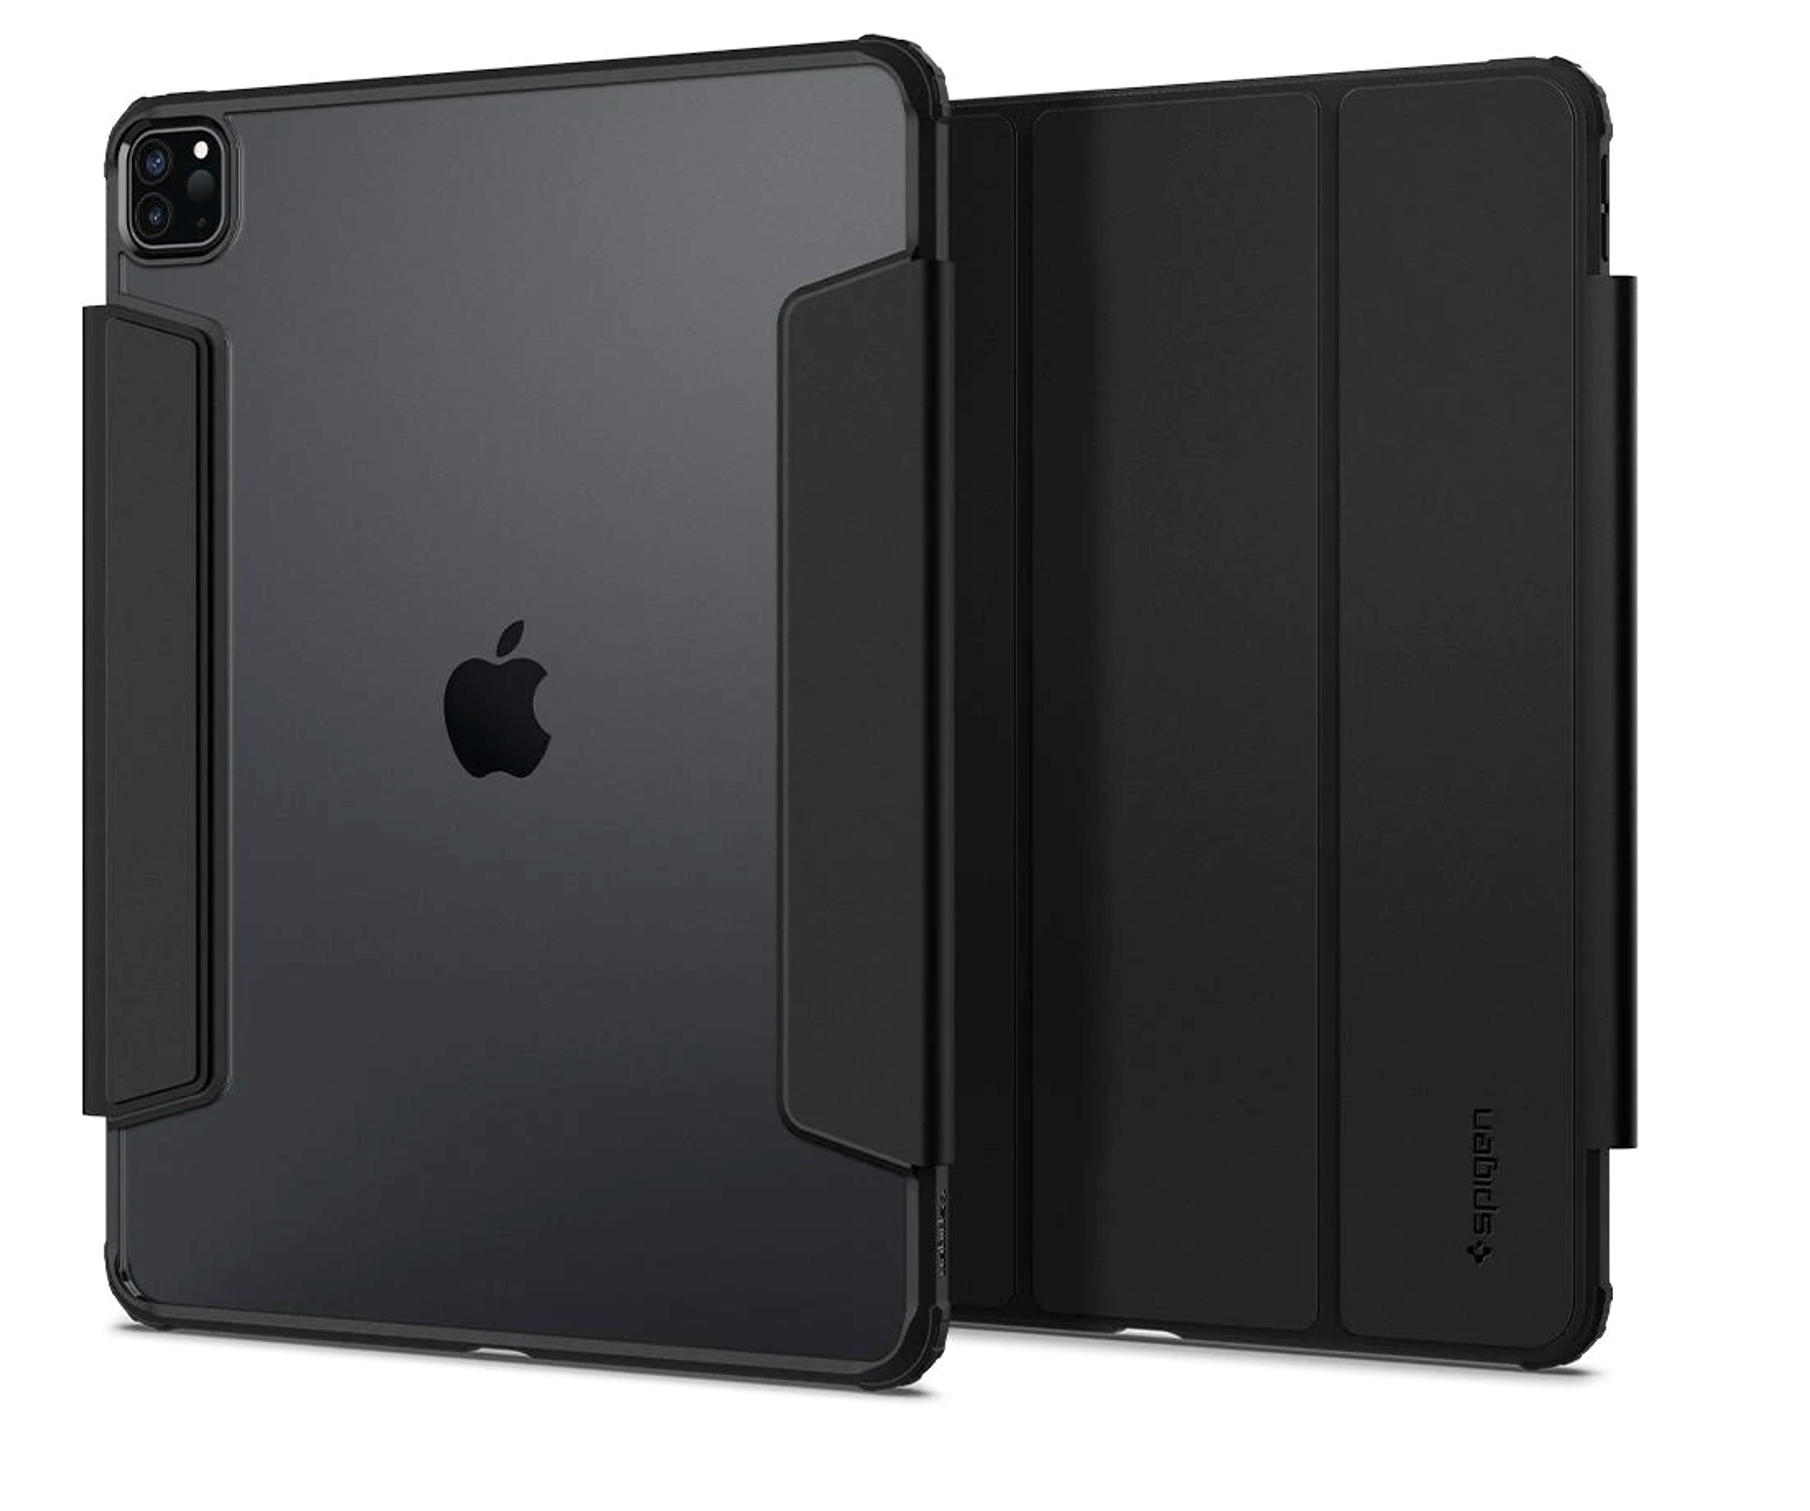 Spigen iPad Pro 12.9 inch case